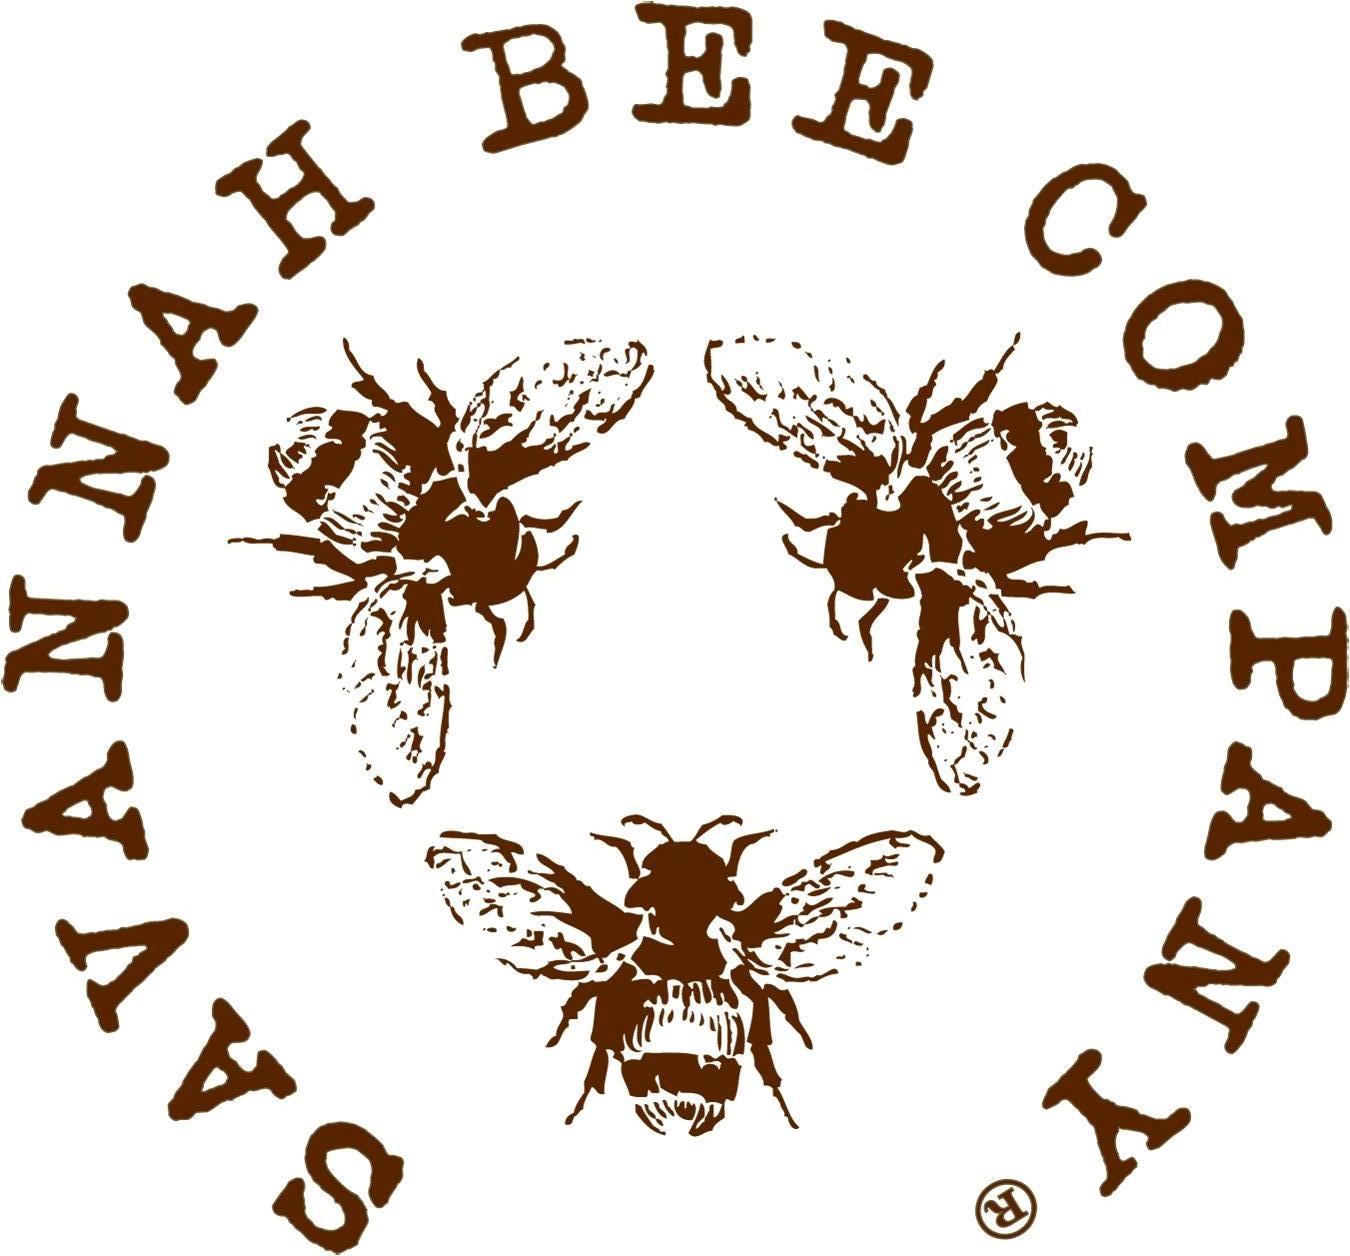 Savannah Bee Co. logo